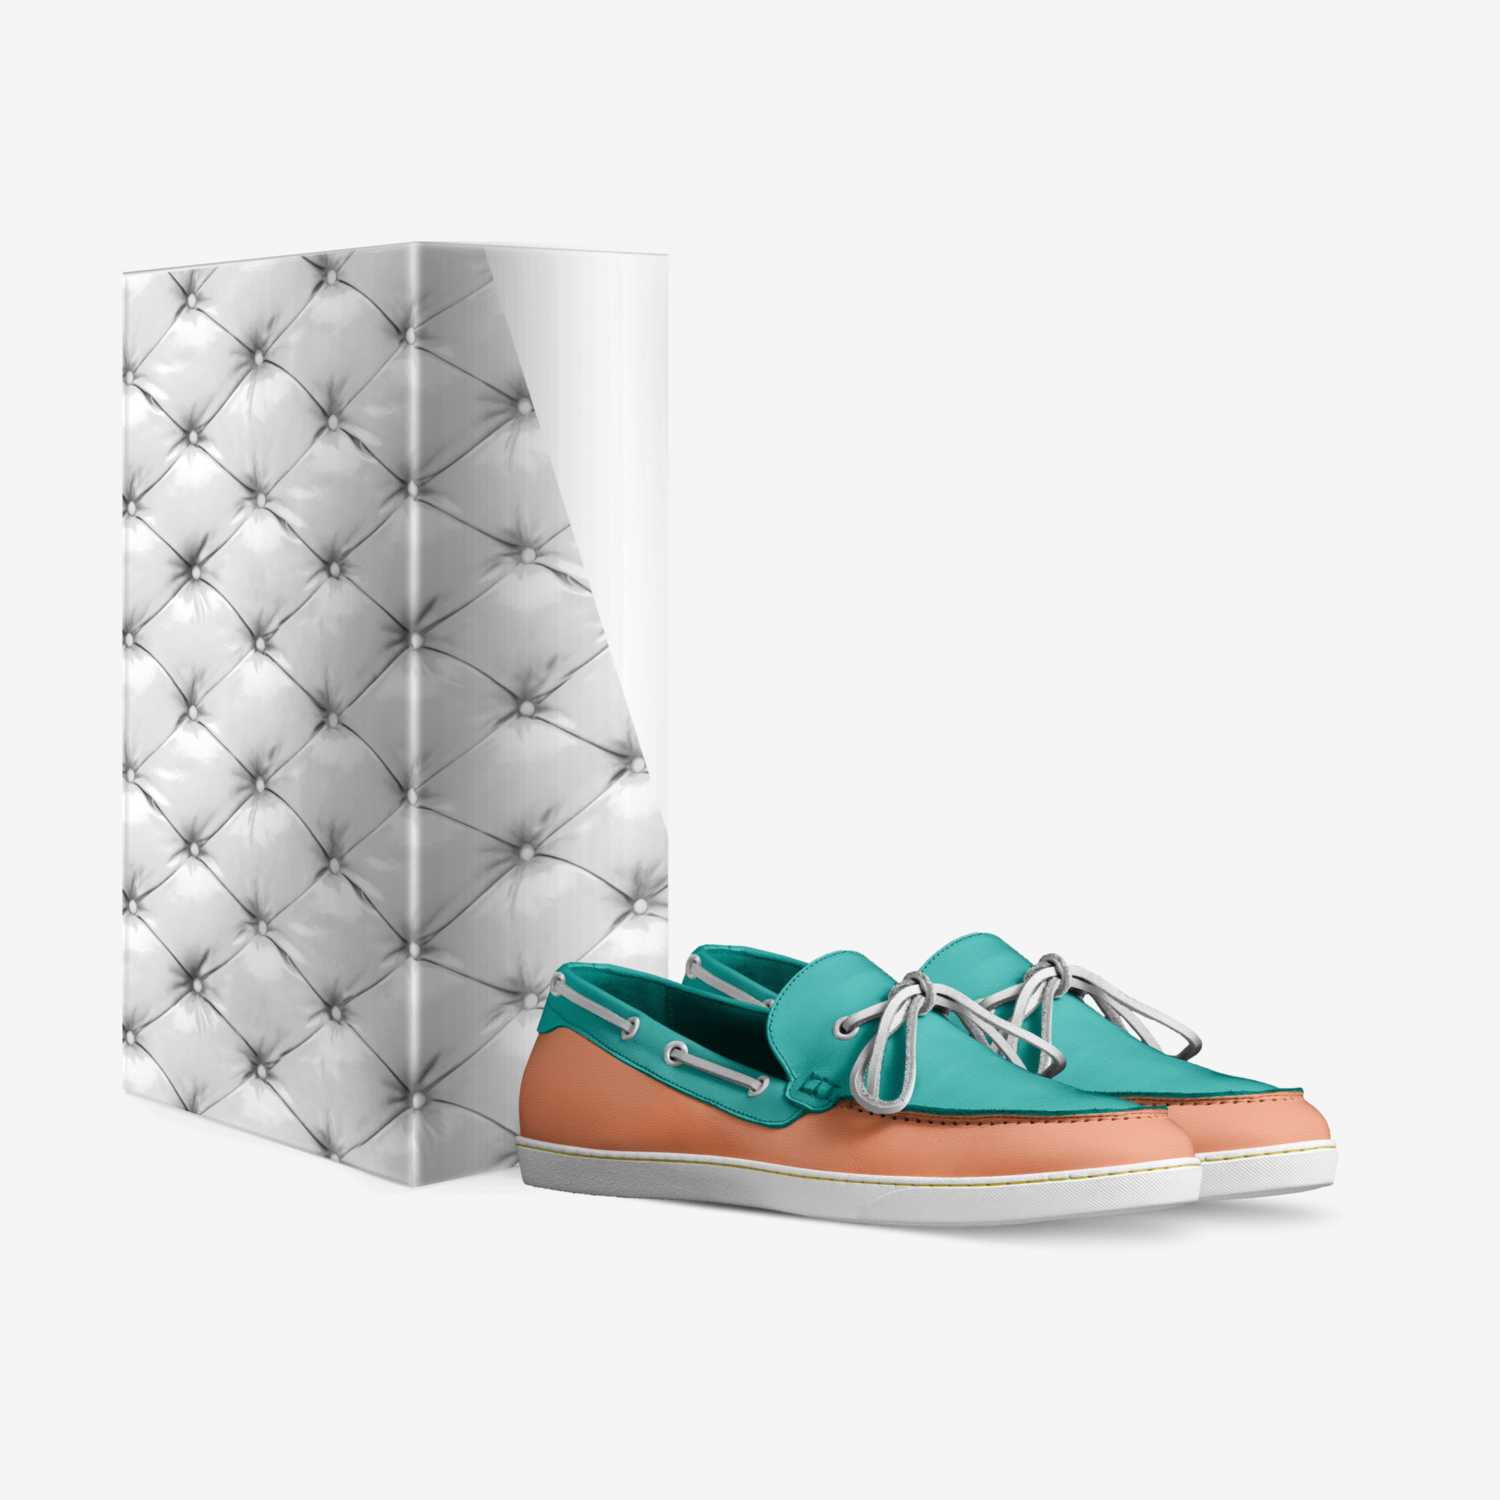 LA custom made in Italy shoes by Laurynas Čiuta | Box view